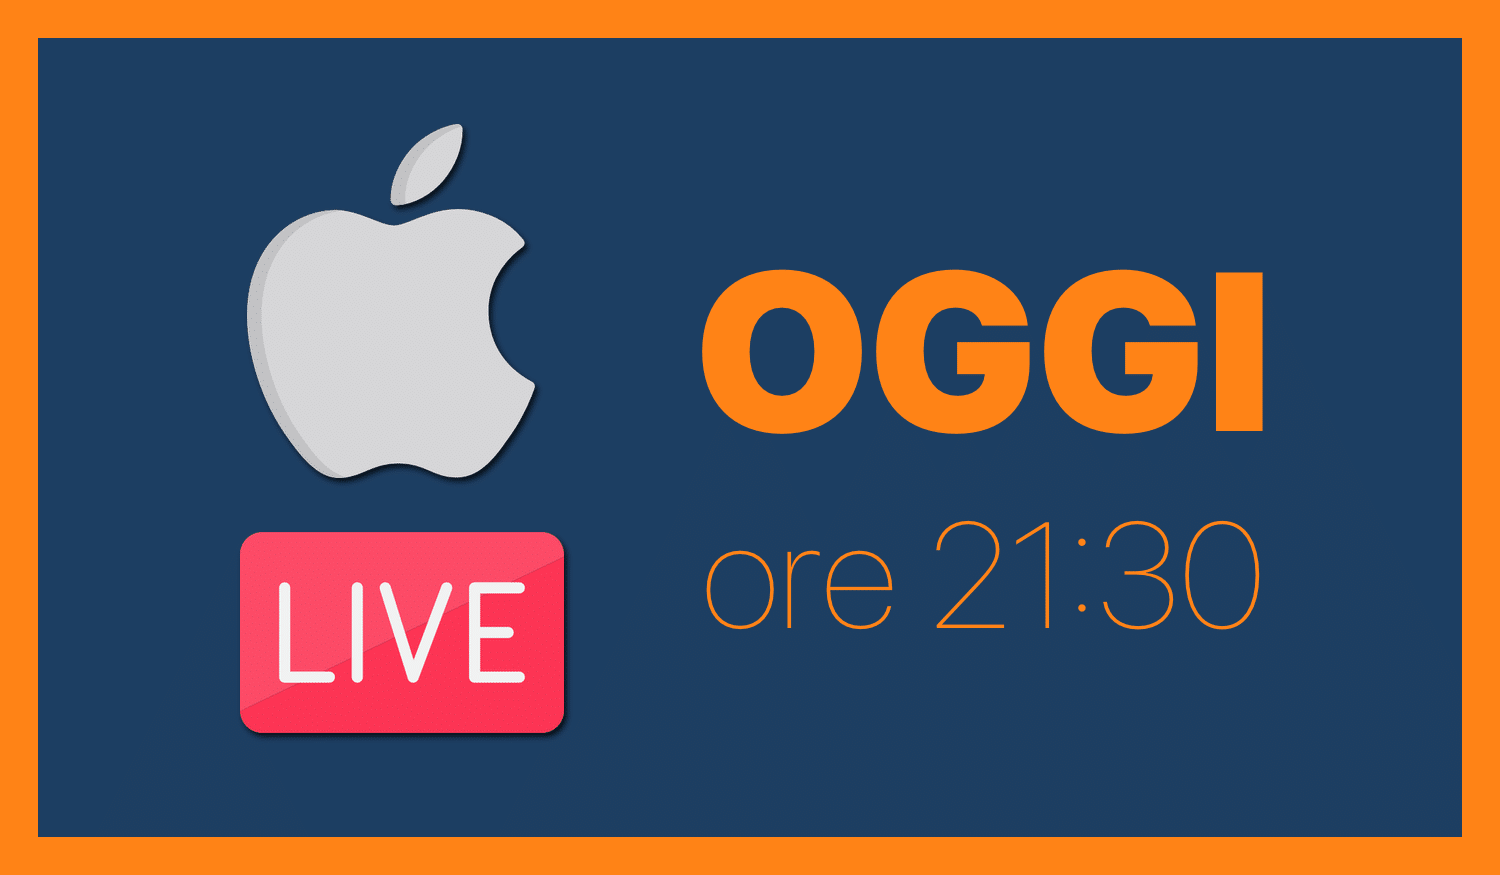 [TERMINATA] Apple LIVE: OGGI, ore 21:30 su YouTube!